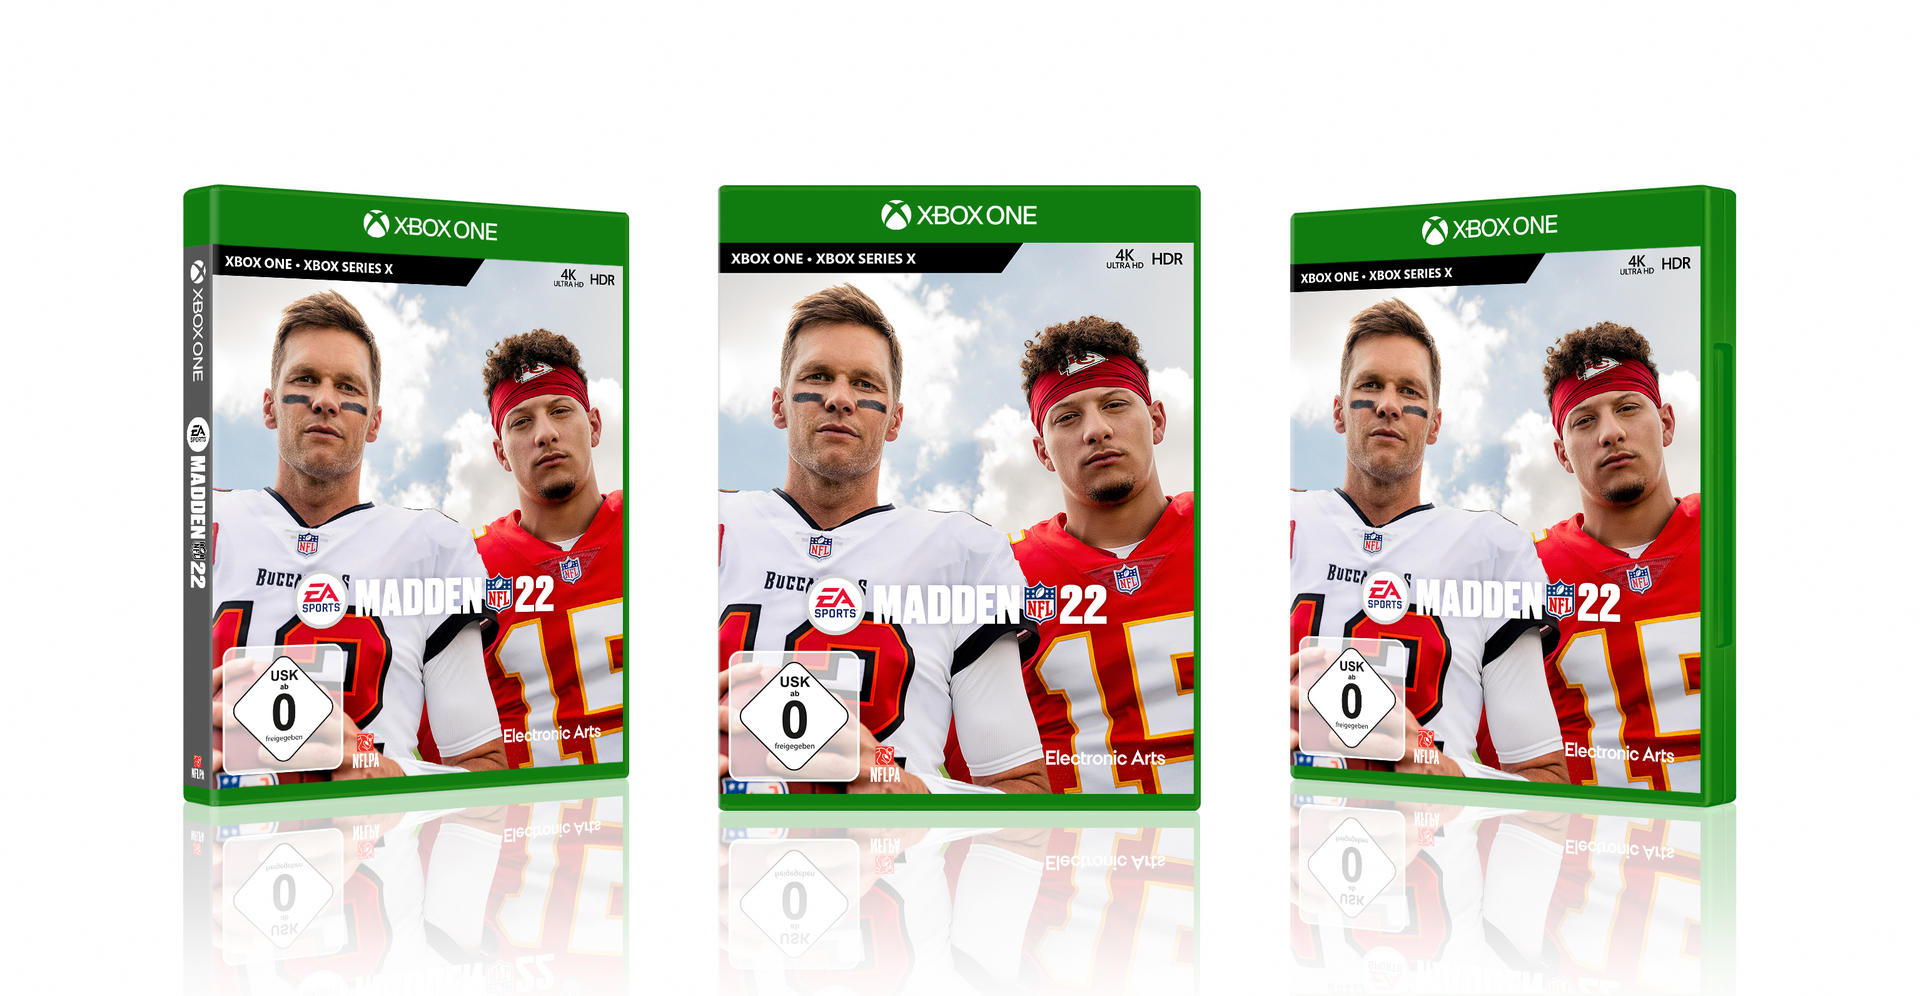 - [Xbox One] Madden 22 NFL